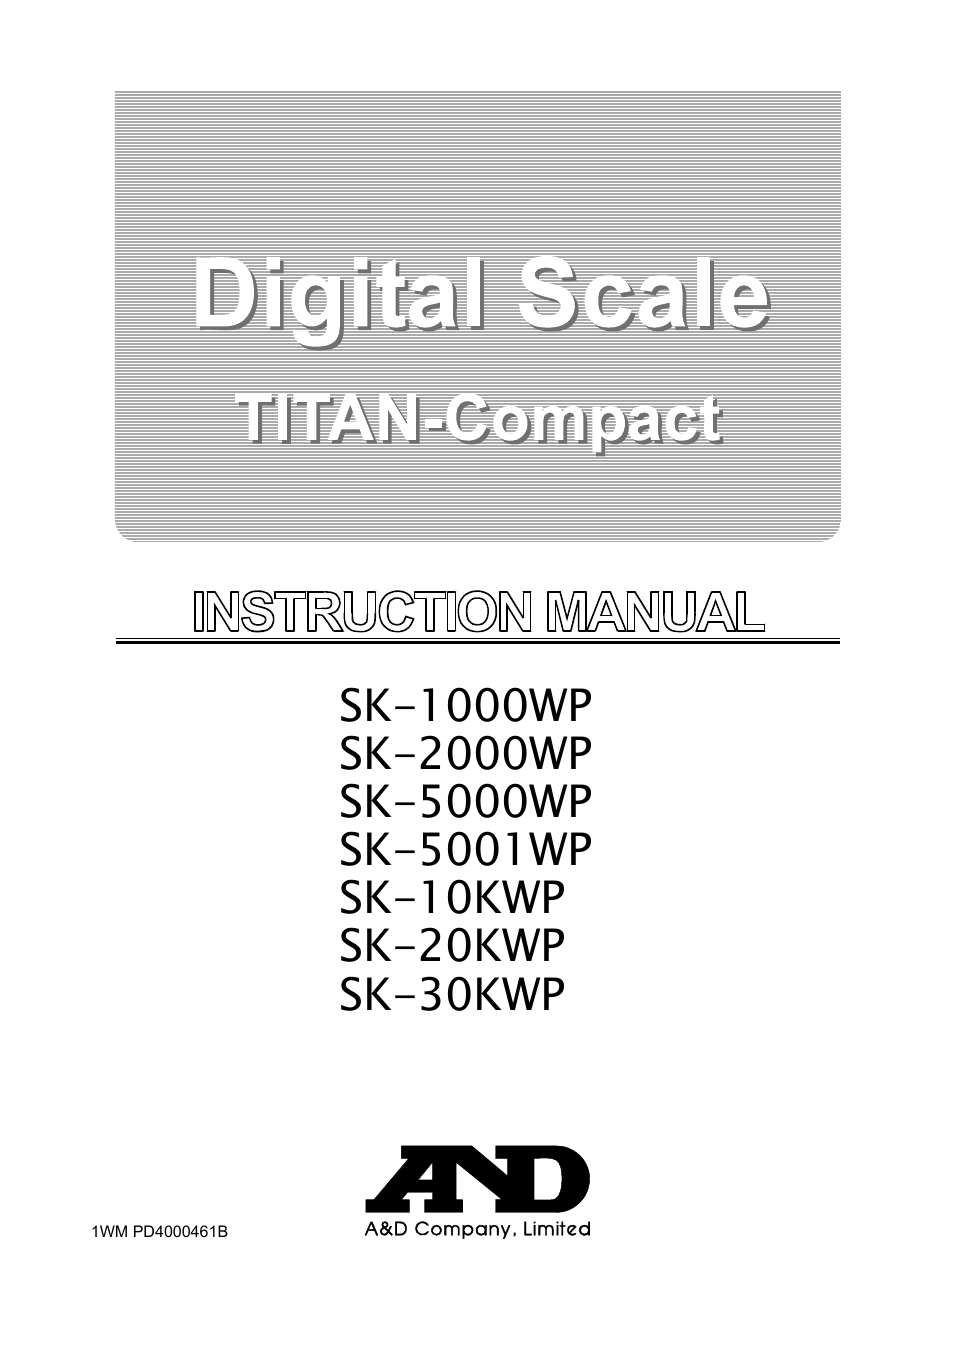 Digital Scale SK-30KWP